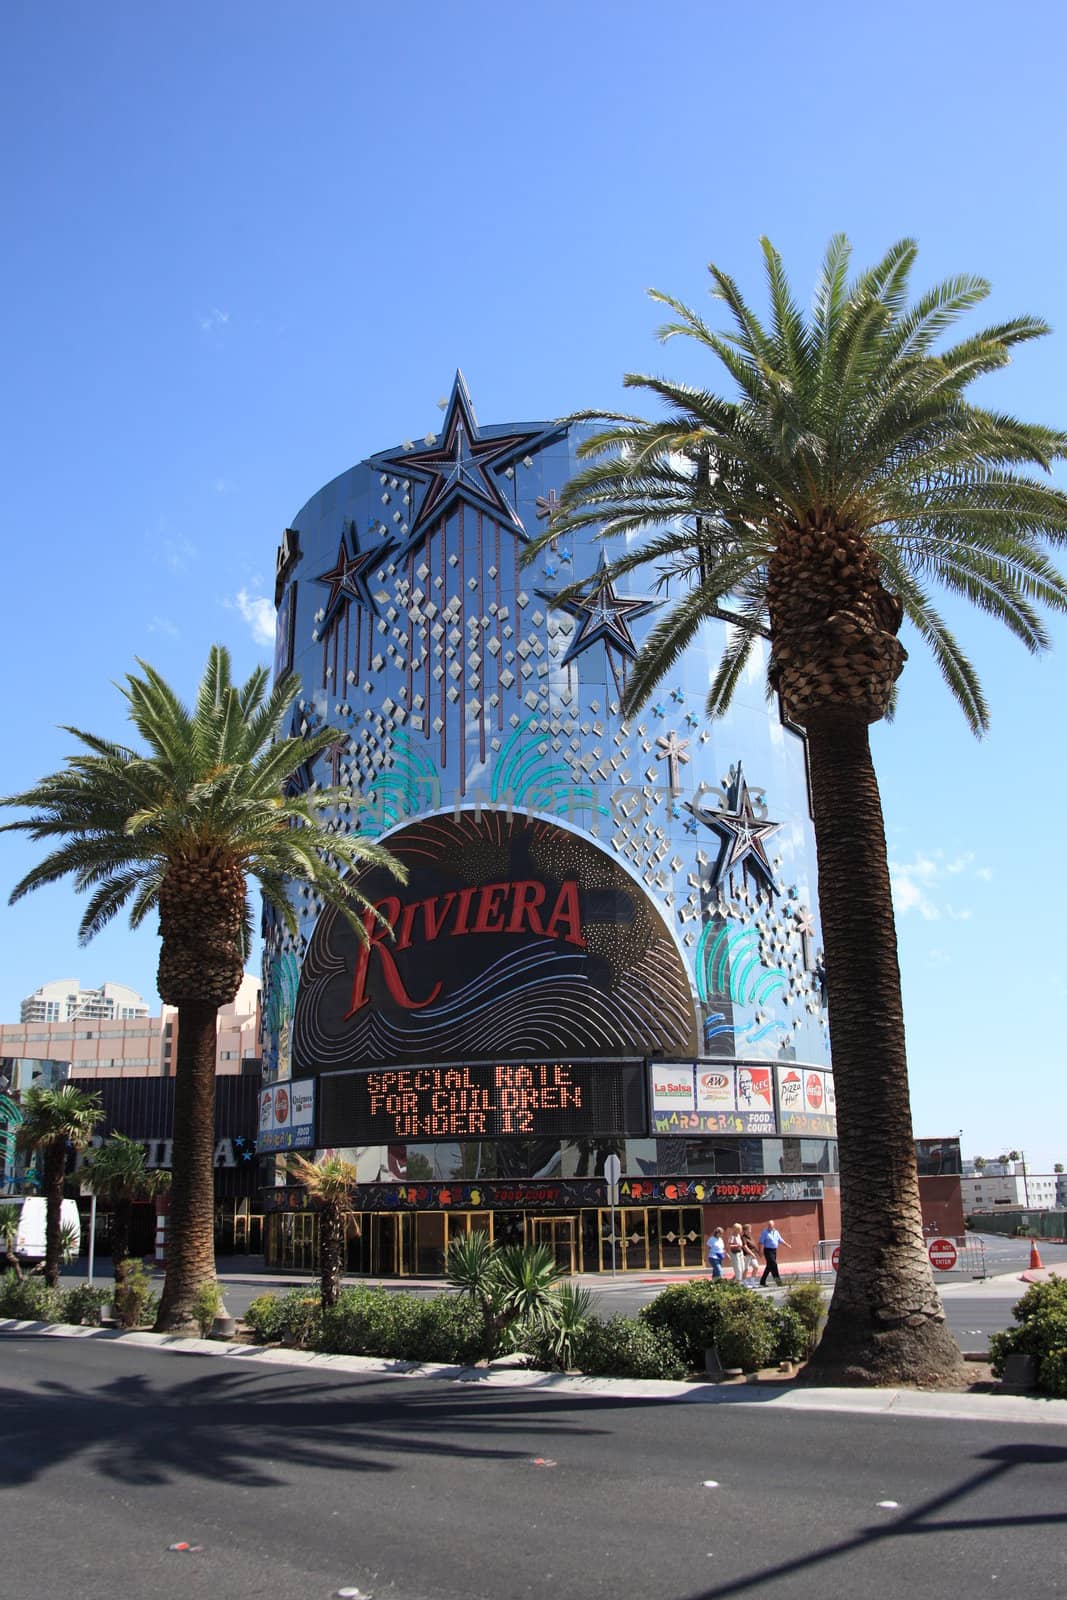 Classic Riviera Hotel on the Las Vegas Strip in Nevada